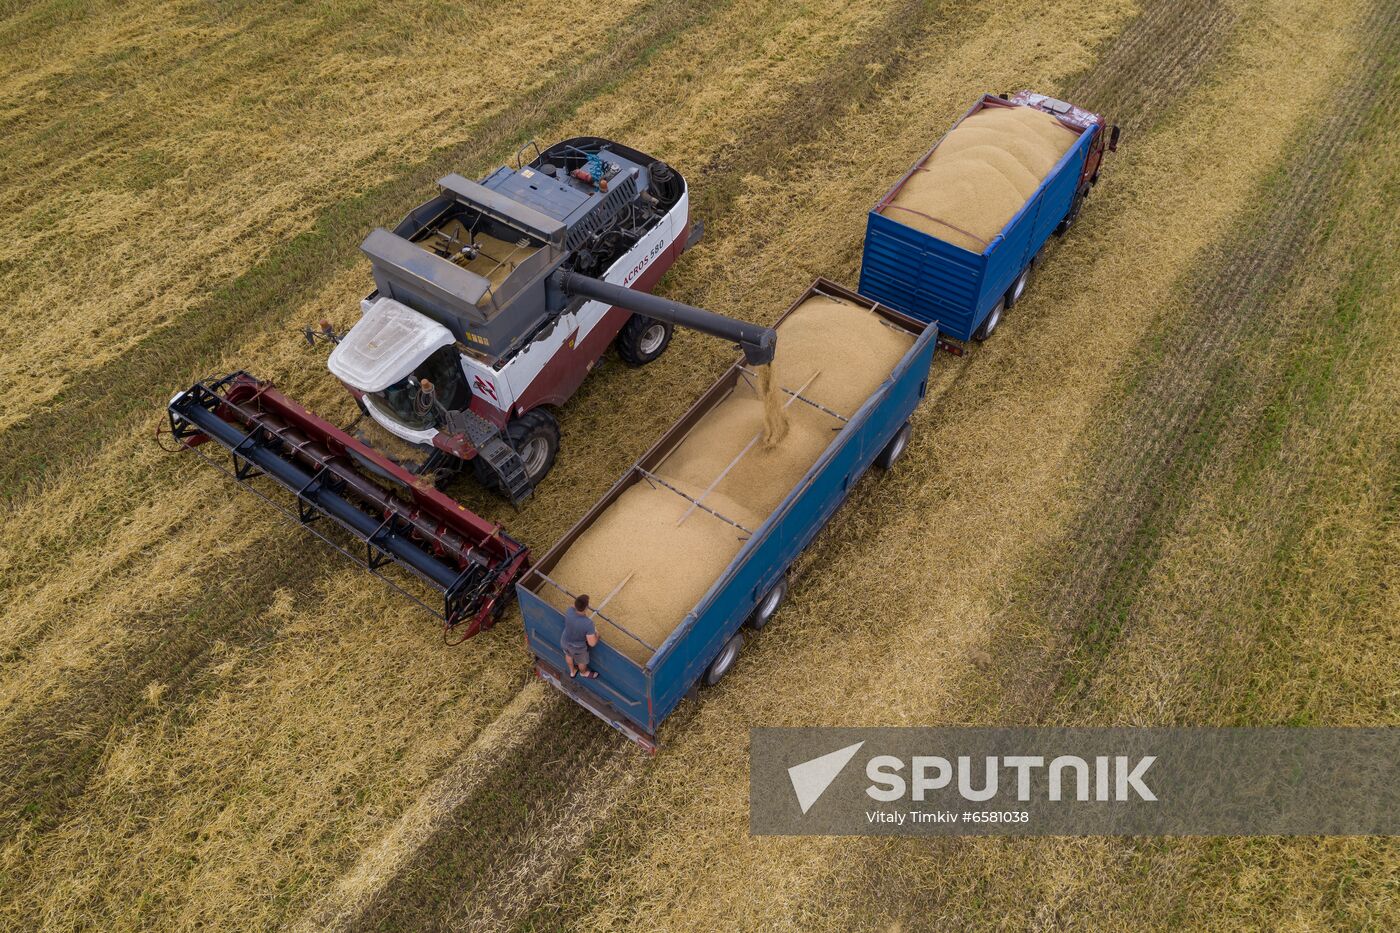 Russia Barley Harvest